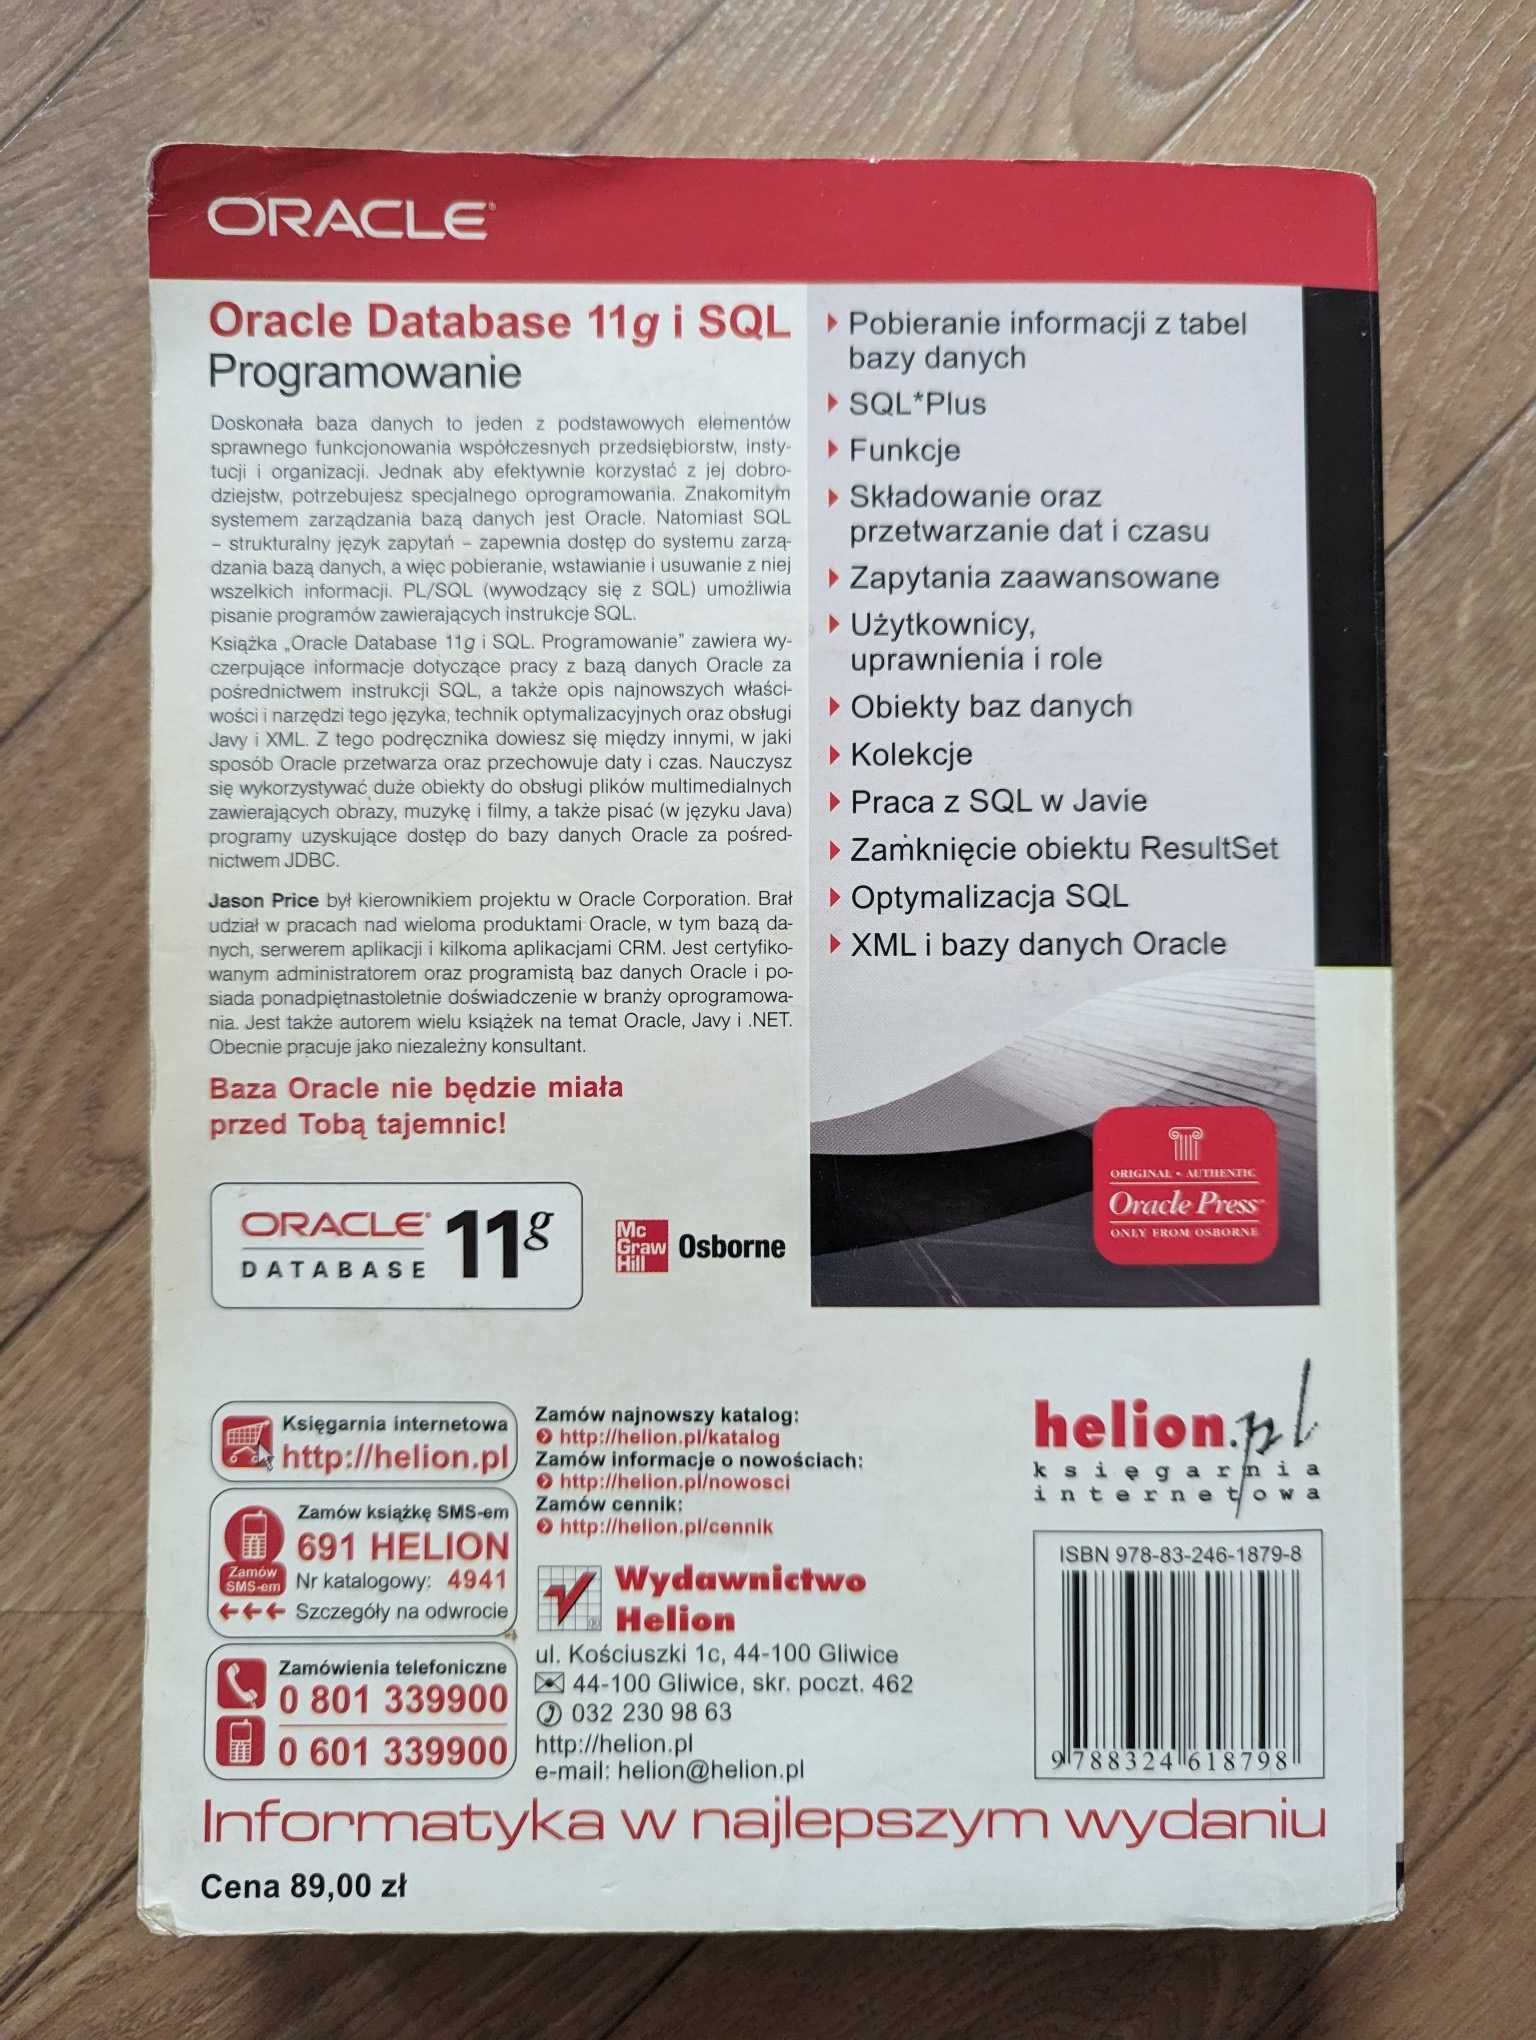 Oracle Databse 11g i SQL programowanie